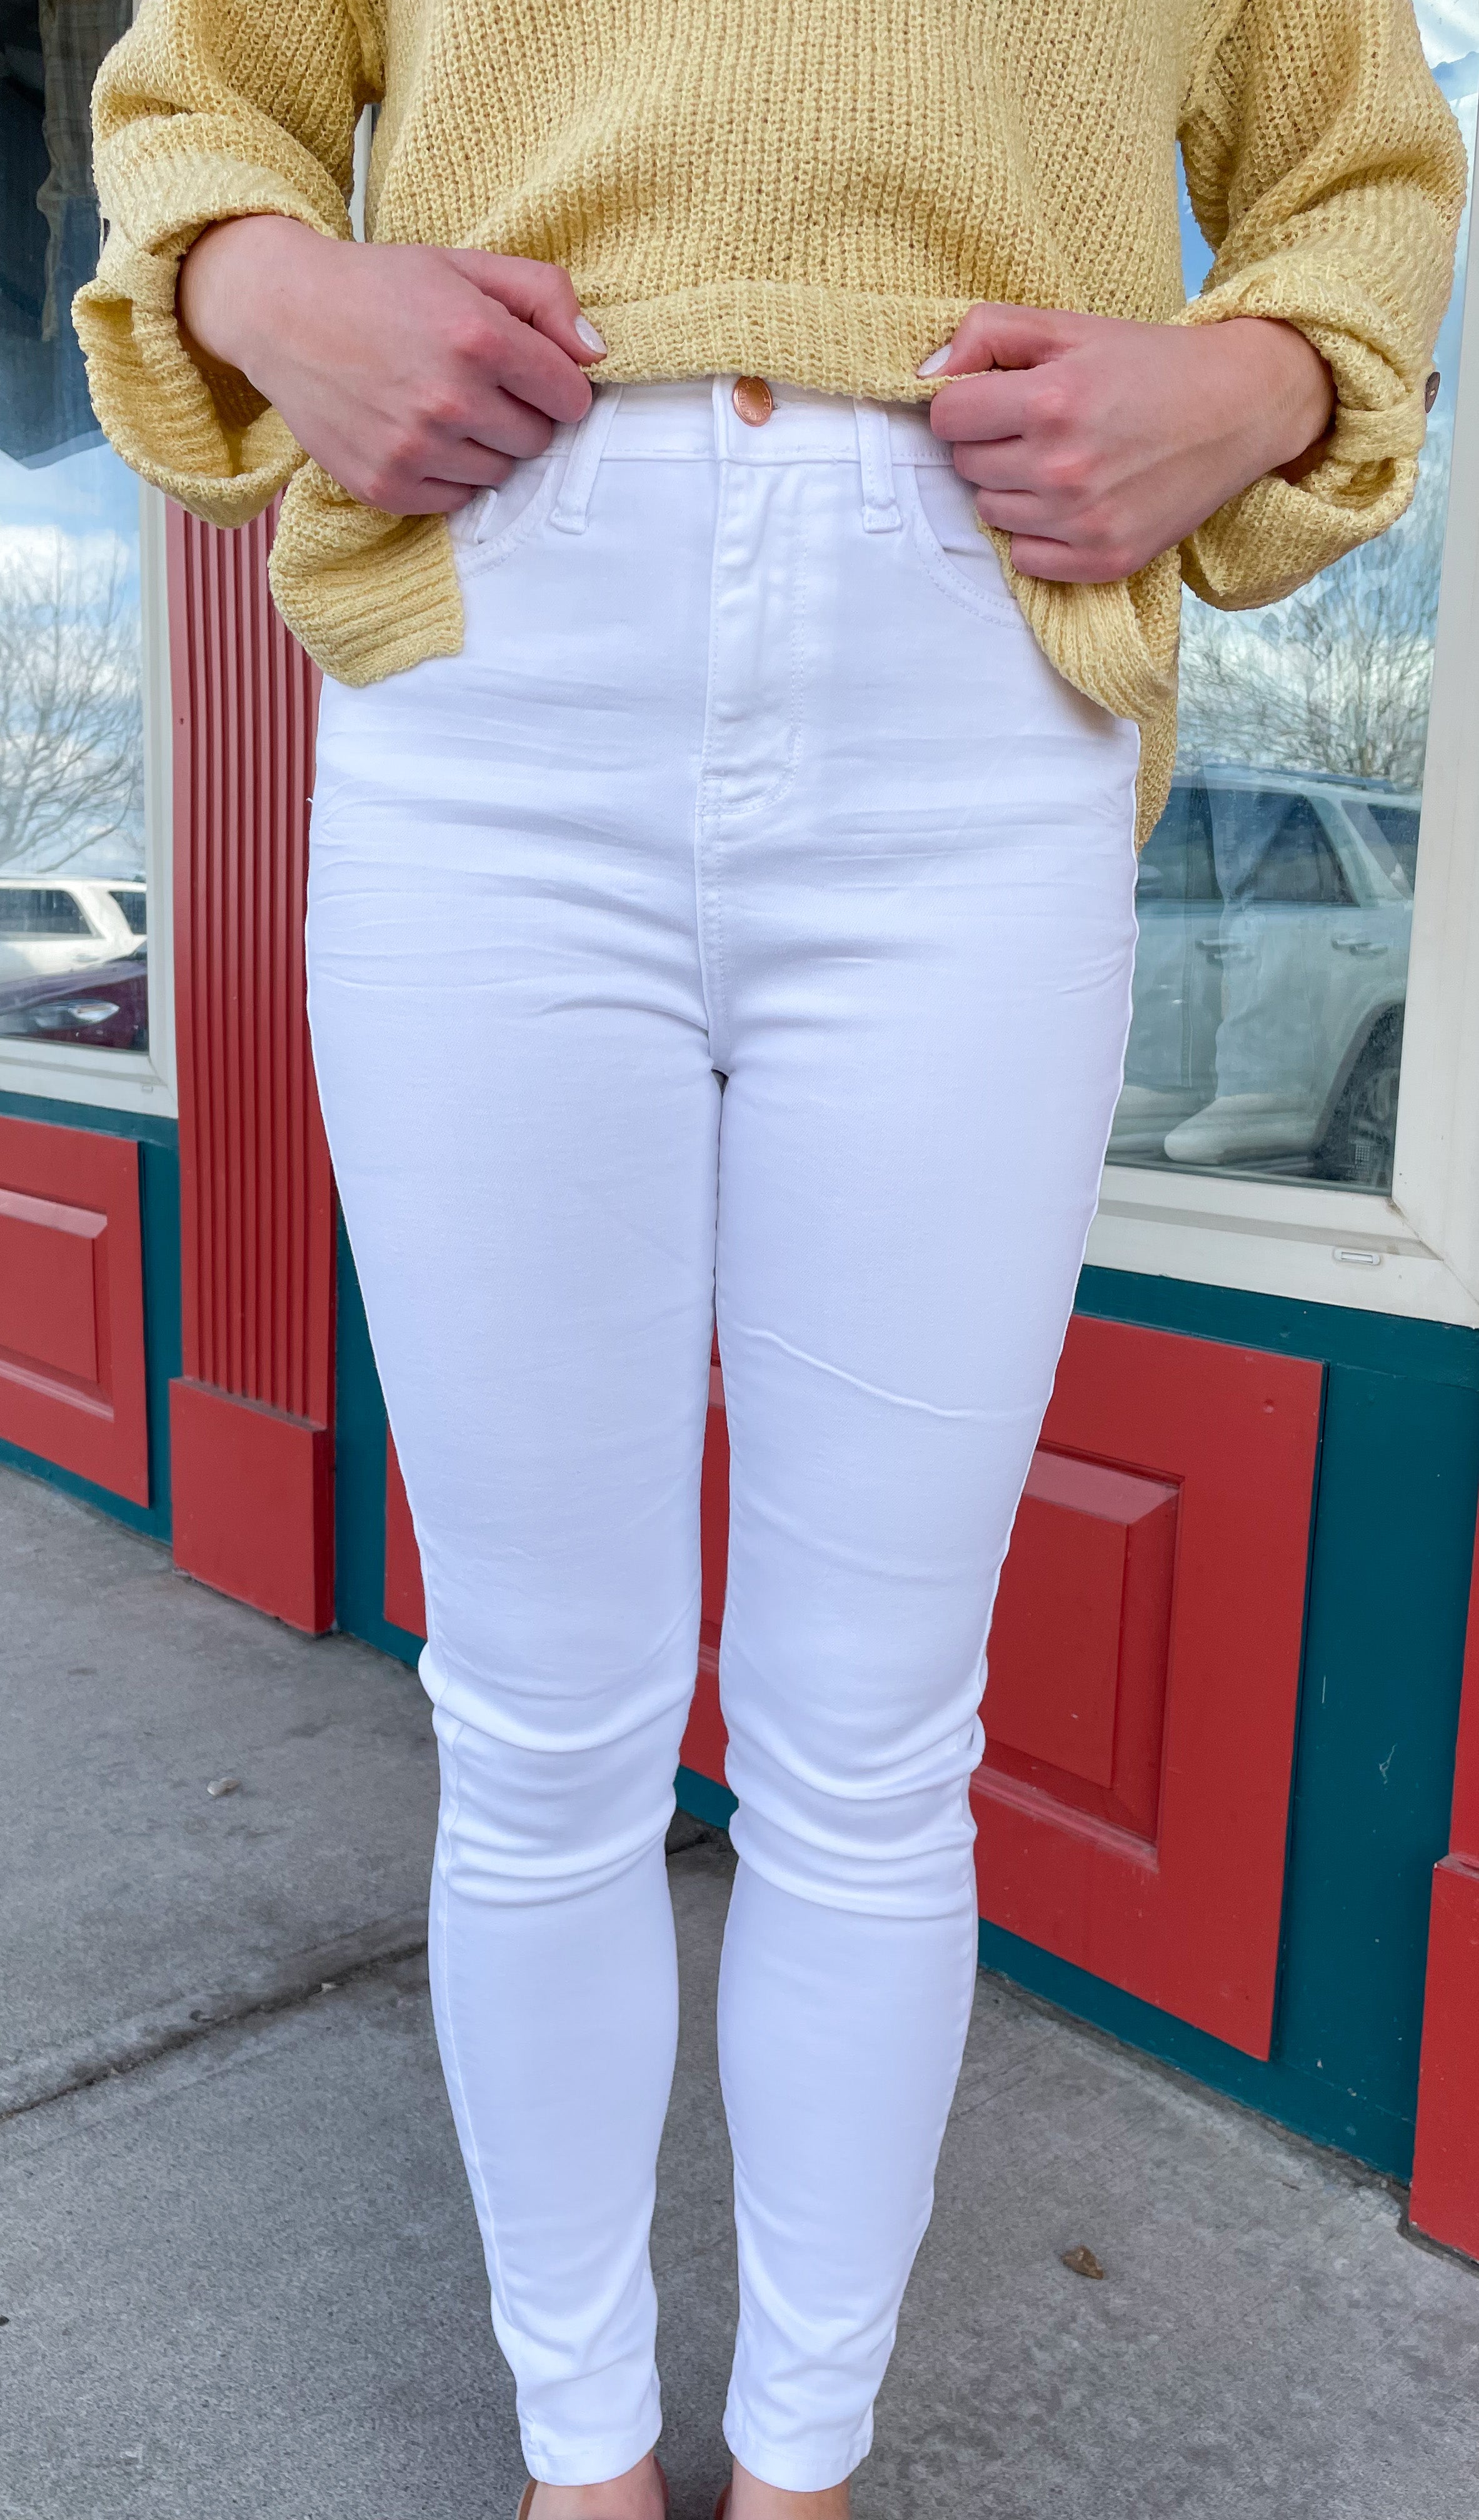 Skinny High Jeans - White - Ladies | H&M IN